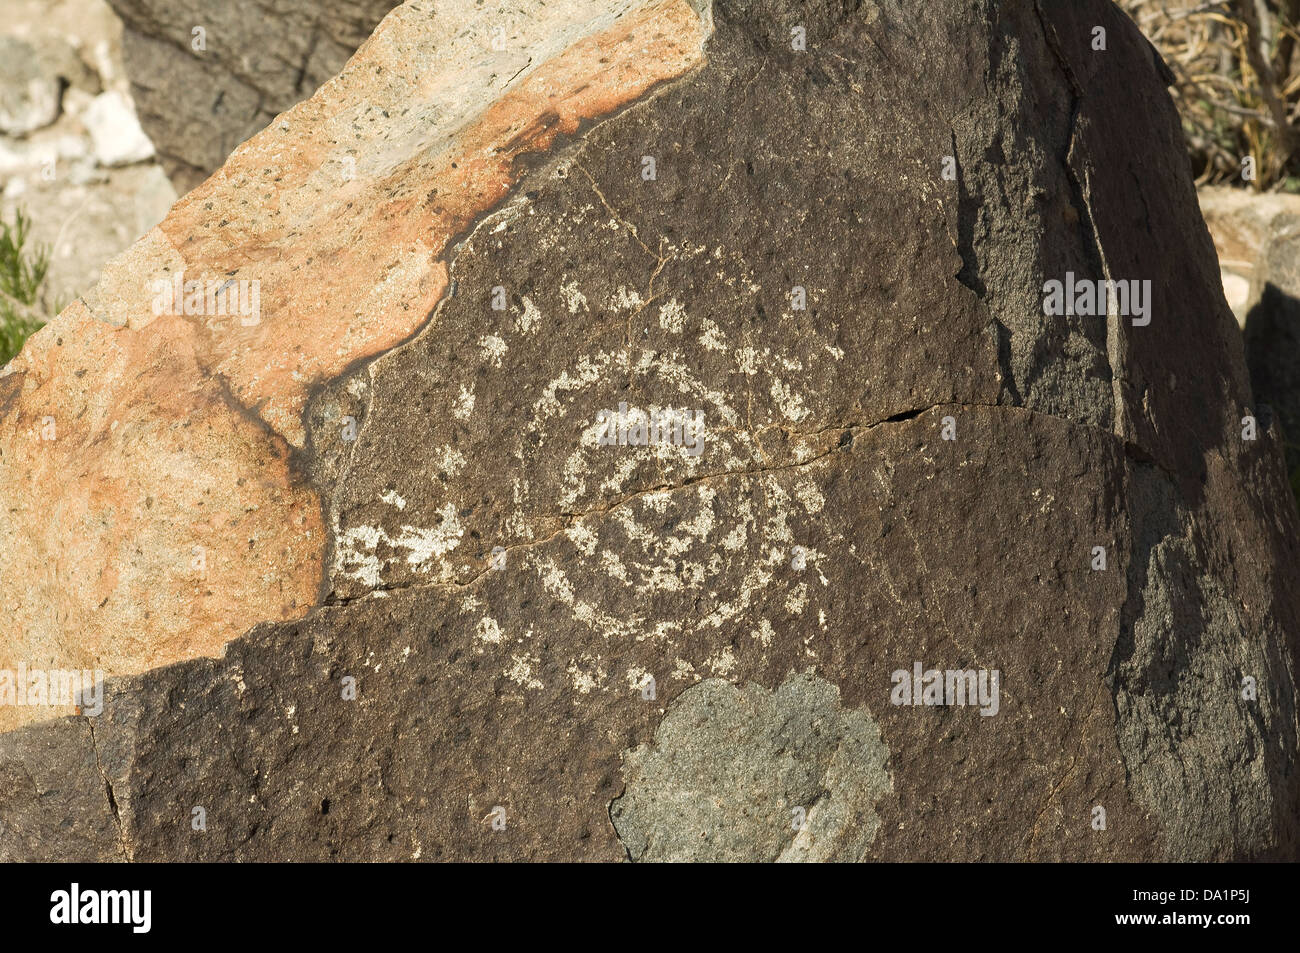 Pecked whorl Jornada-Mogollon petroglyphs at Three Rivers site, New Mexico. Digital photograph Stock Photo